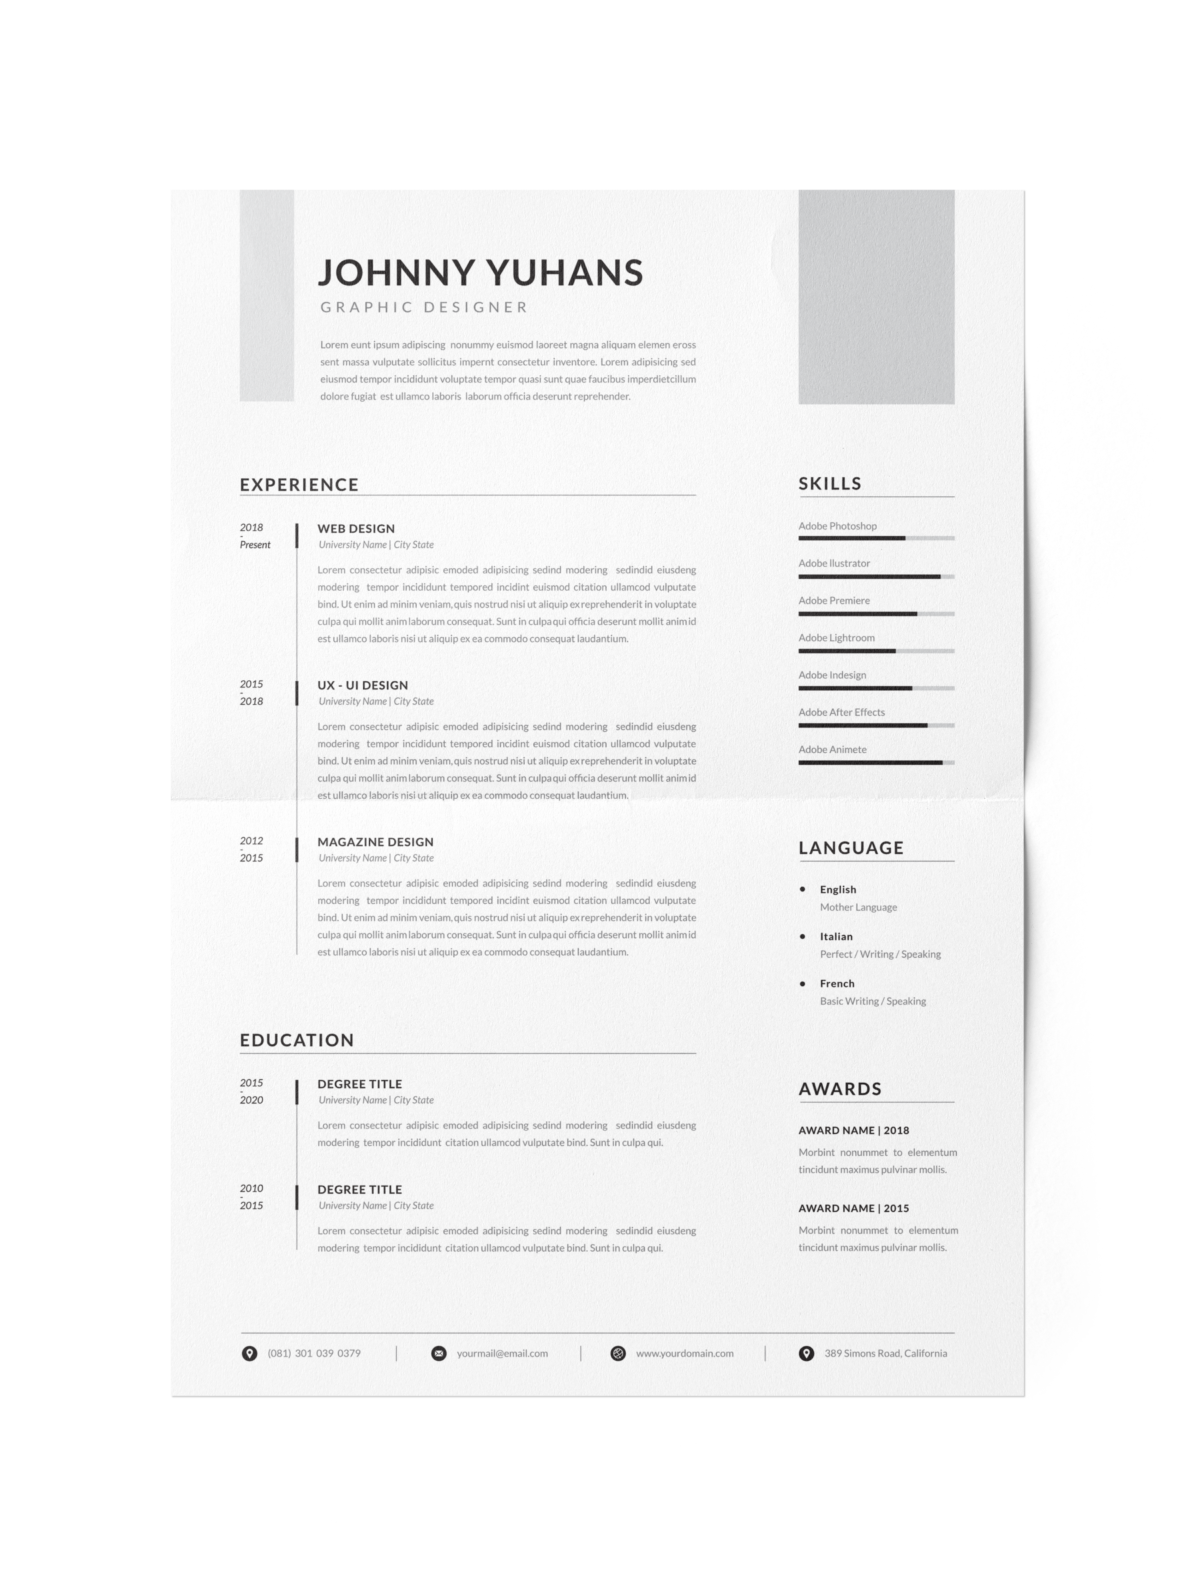 CV #78 Johnny Yuhans